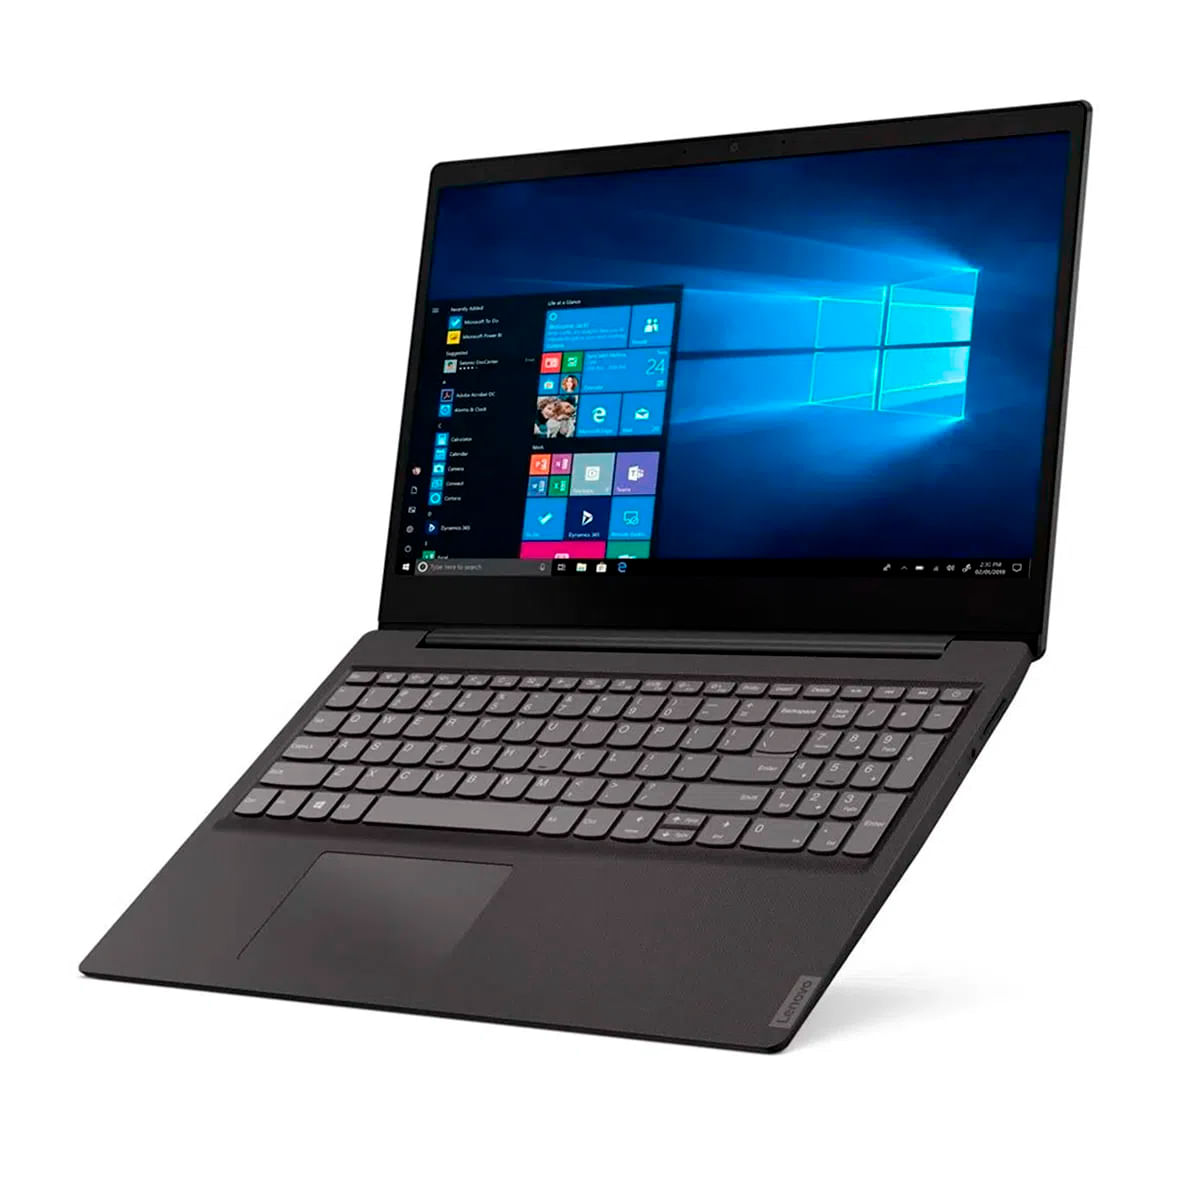 Notebook - Lenovo 82hb000dbr I5-1035g1 1.00ghz 8gb 256gb Ssd Intel Hd Graphics Windows 10 Professional Bs145 15,6" Polegadas